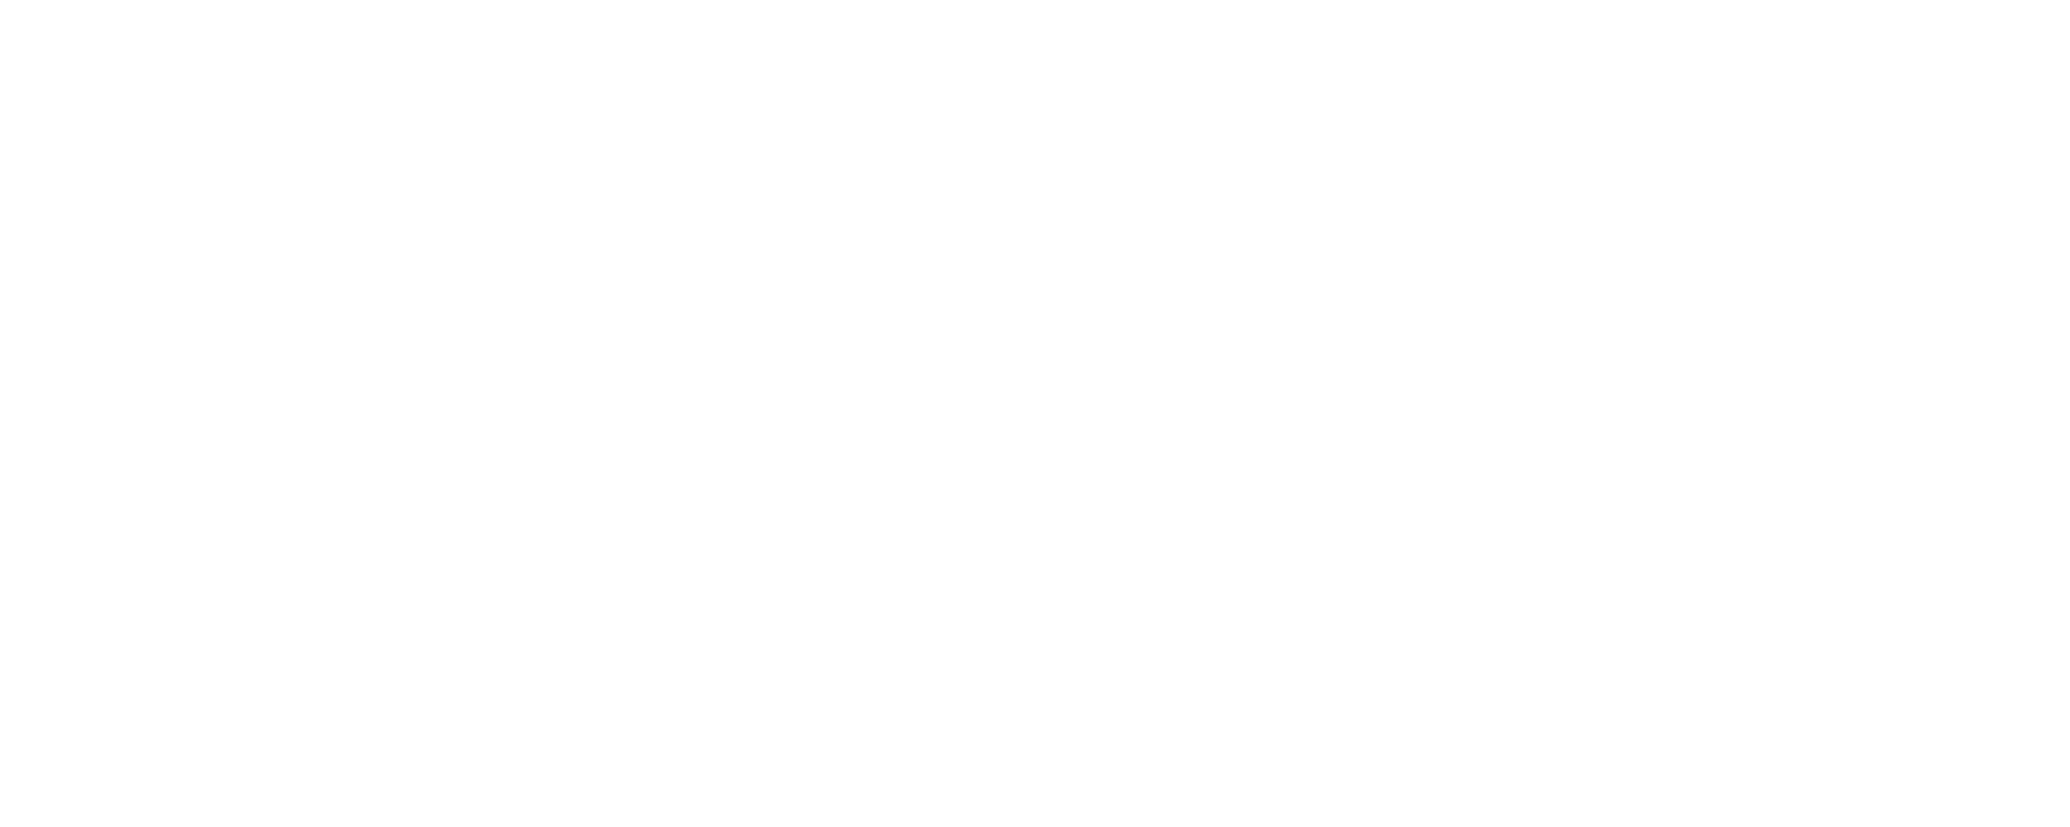 Dave Ure's Collision Plus